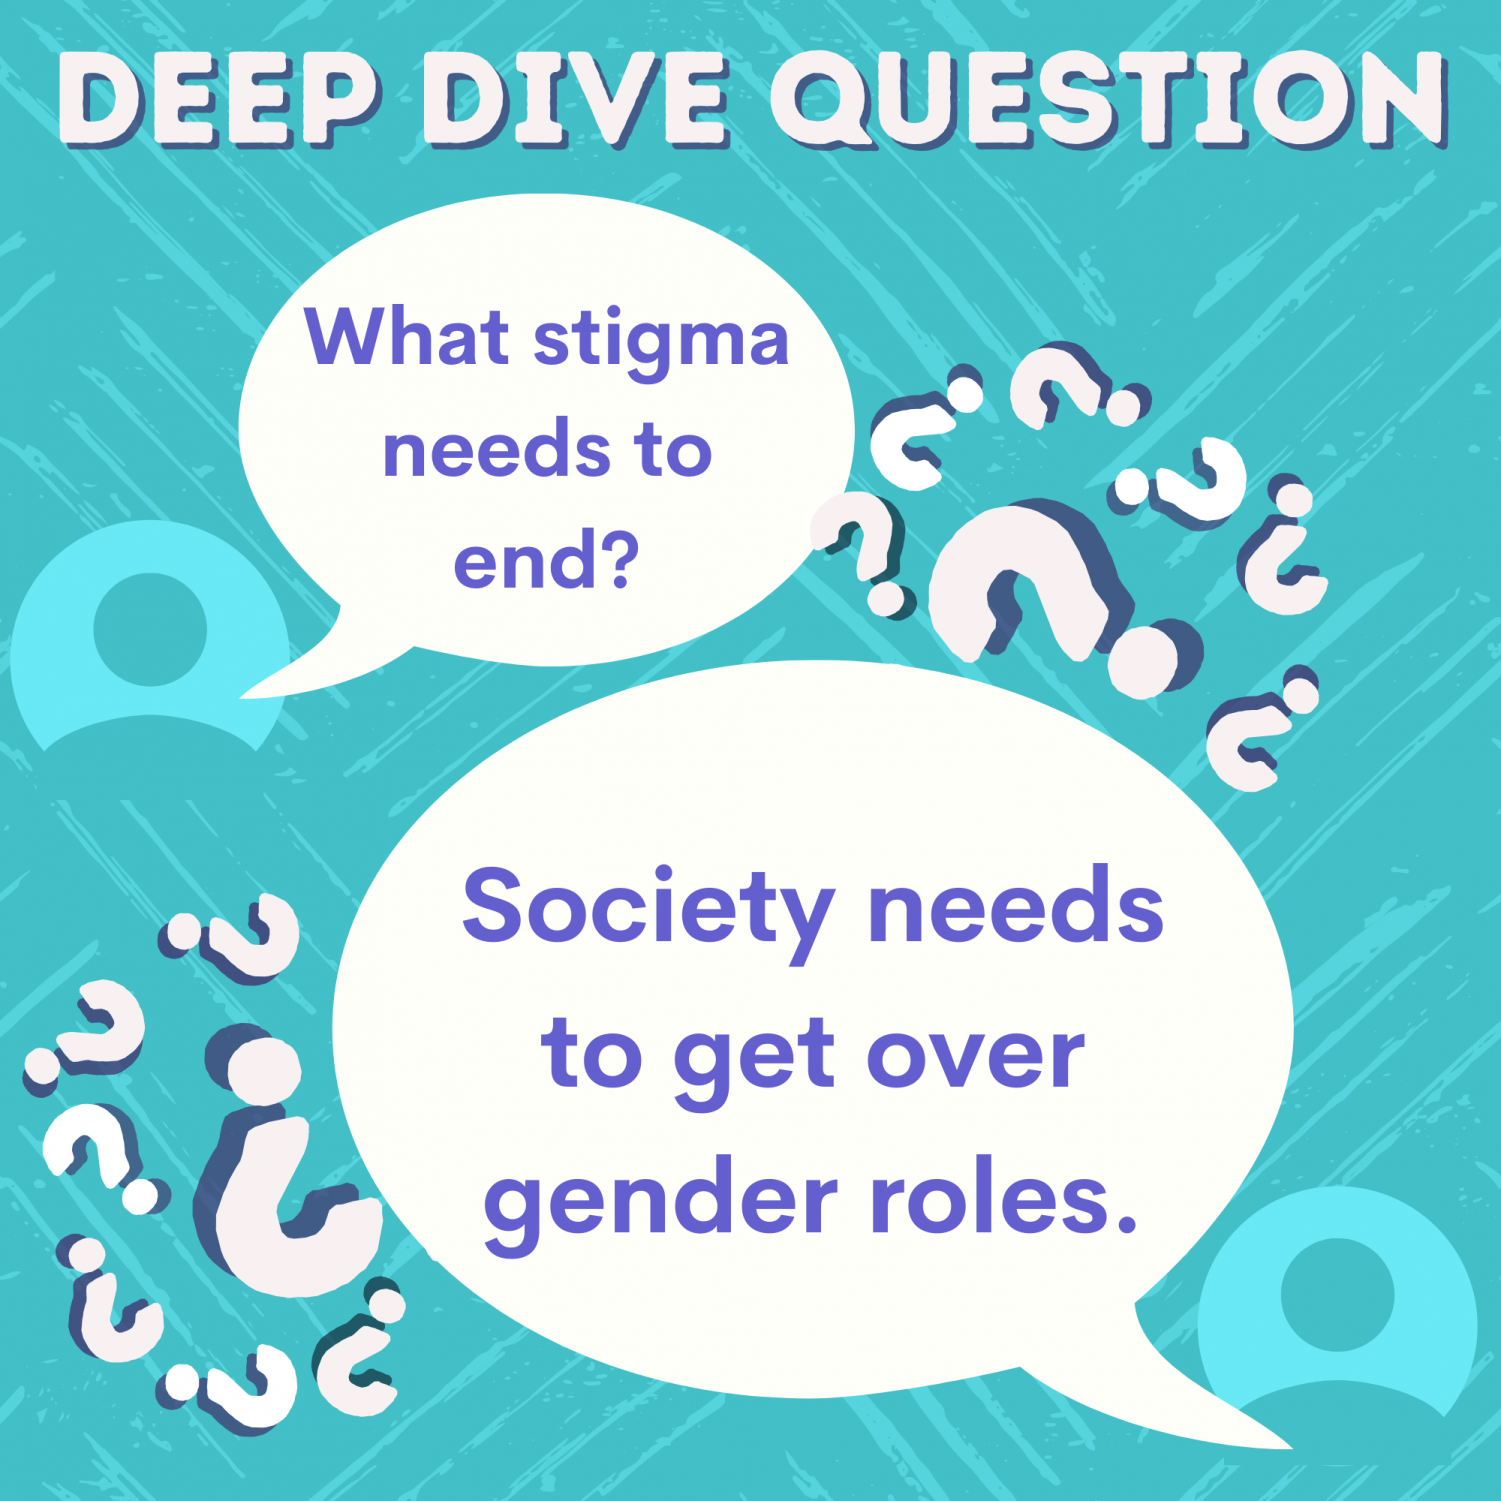 Deep+Dive+Question+%7C+Stigmas